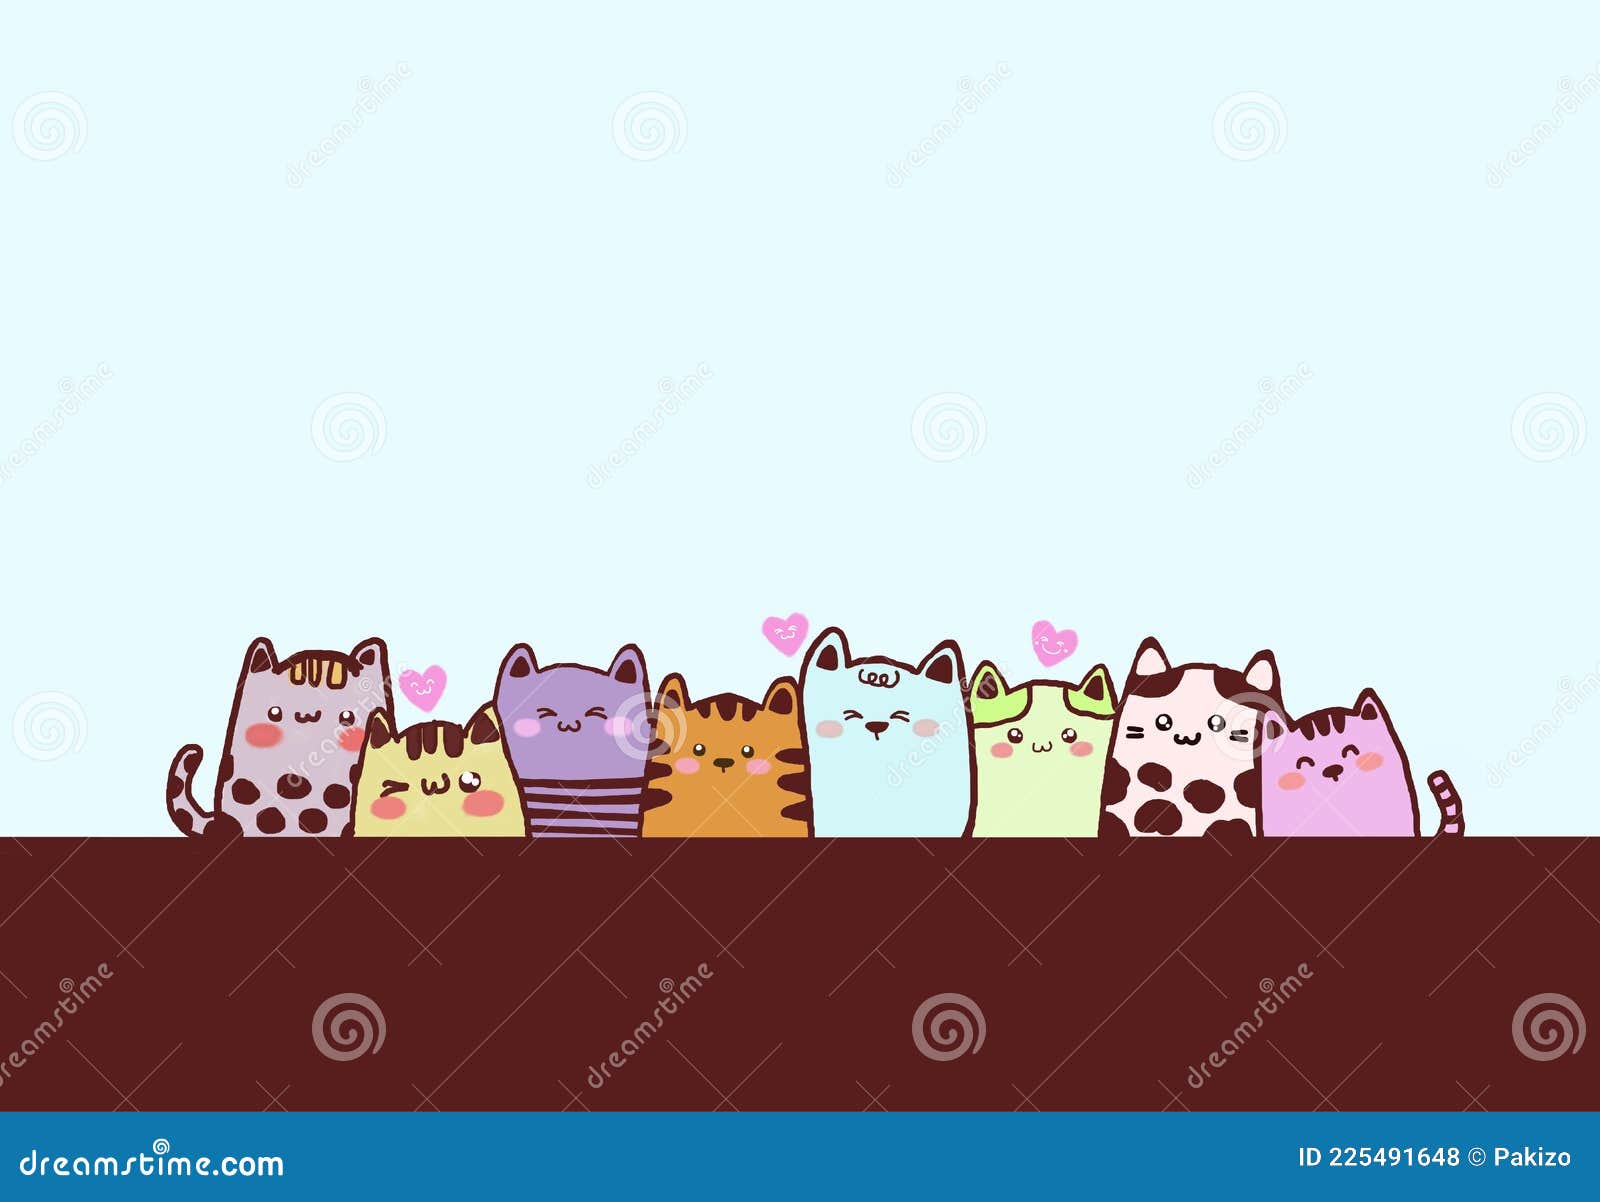 20 Cute Hello Kitty Wallpaper Ideas  FK Pink Background  Idea Wallpapers   iPhone WallpapersColor Schemes